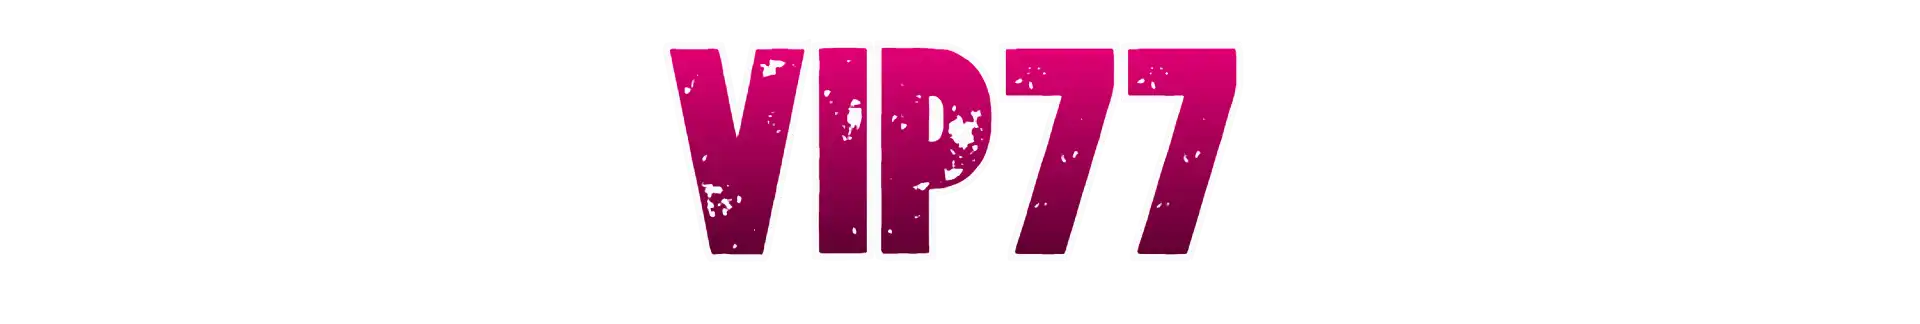 VIP77